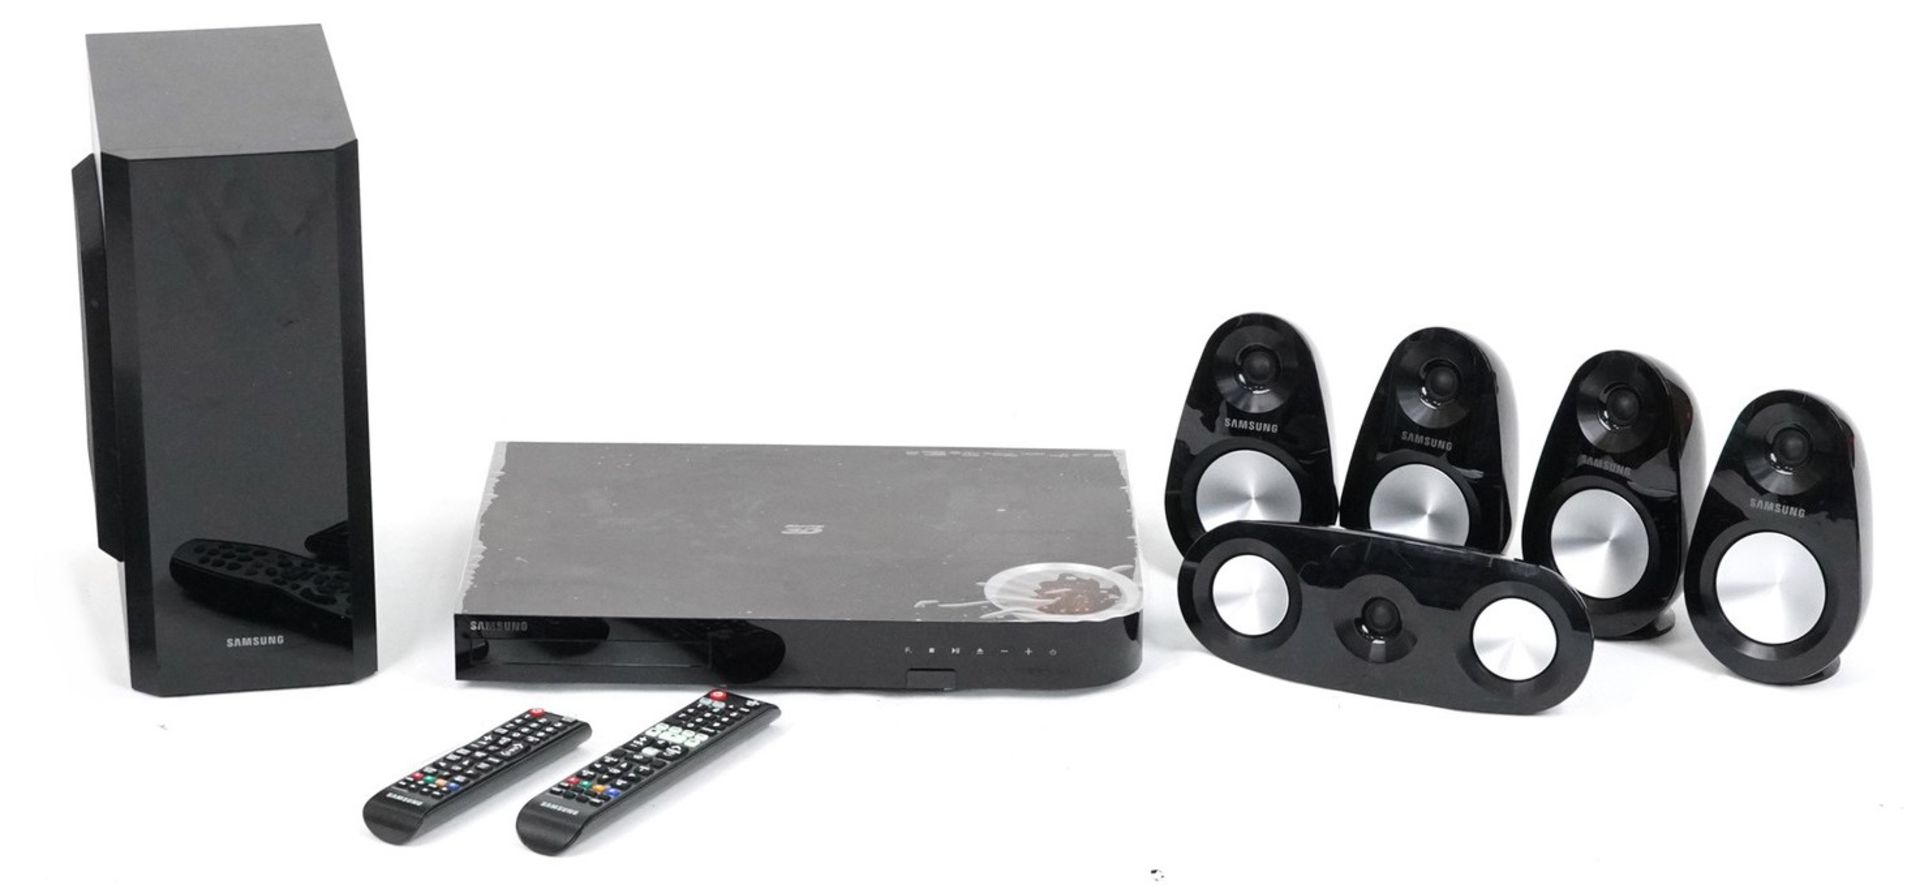 Samsung 75 inch F6400 series 6 smart 3D LED TV model with Samsung DVD player and surround sound - Bild 2 aus 6